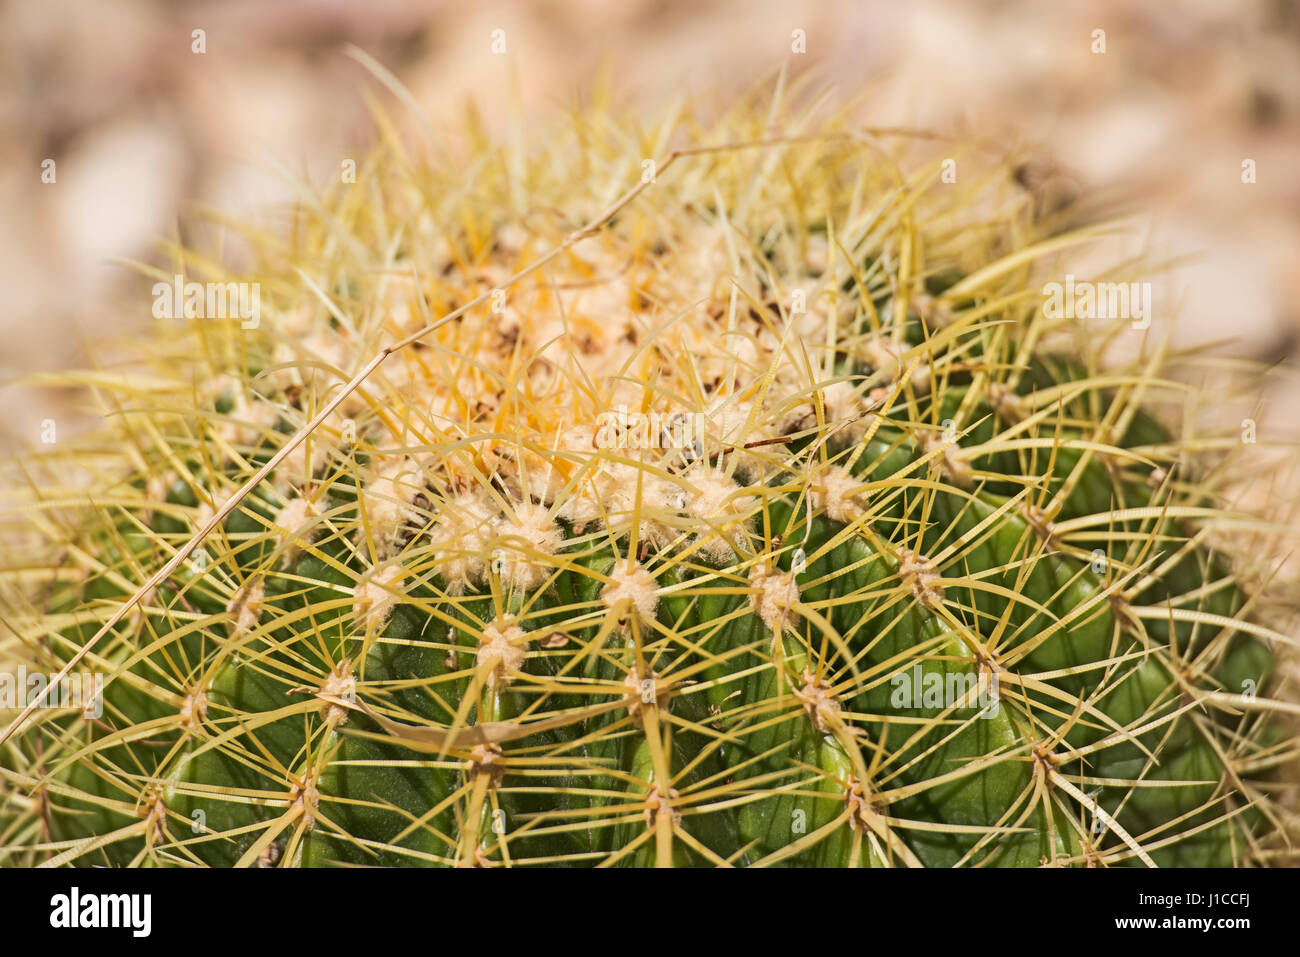 Close-up detail of a barrel cactus plant echinocactus in an ornamental arid desert garden Stock Photo